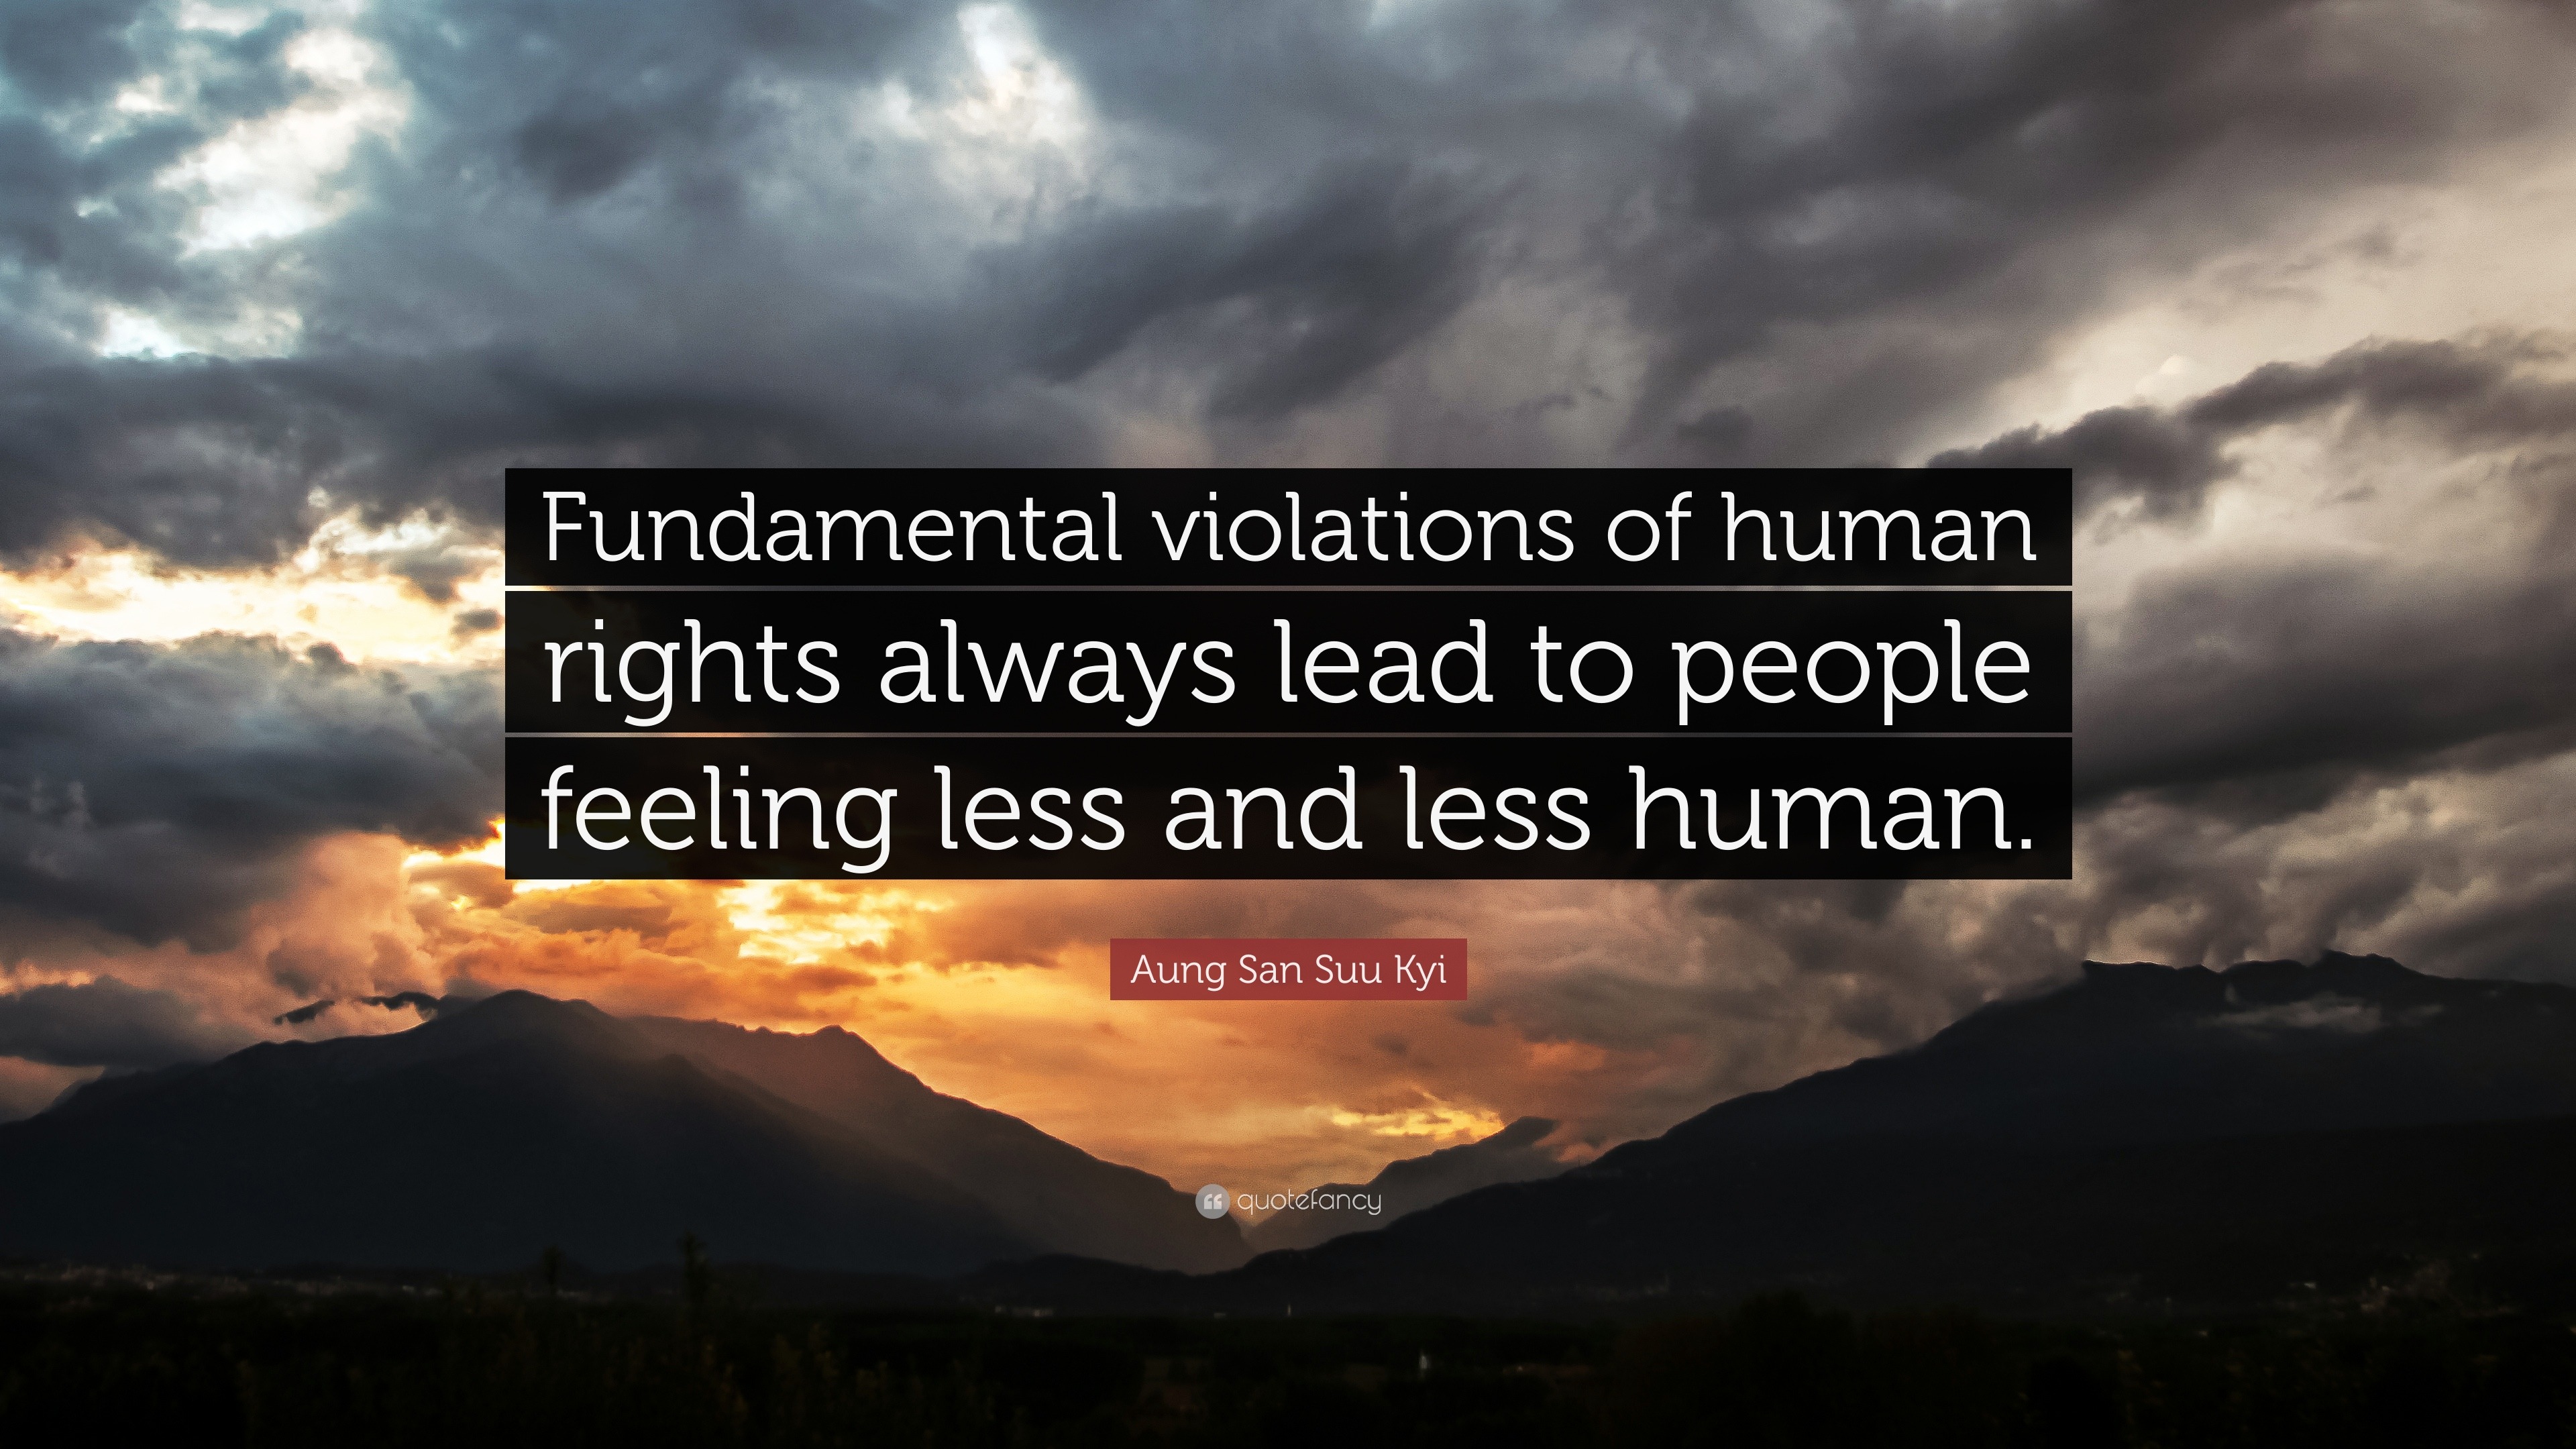 Aung San Suu Kyi Quote: "Fundamental violations of human ...